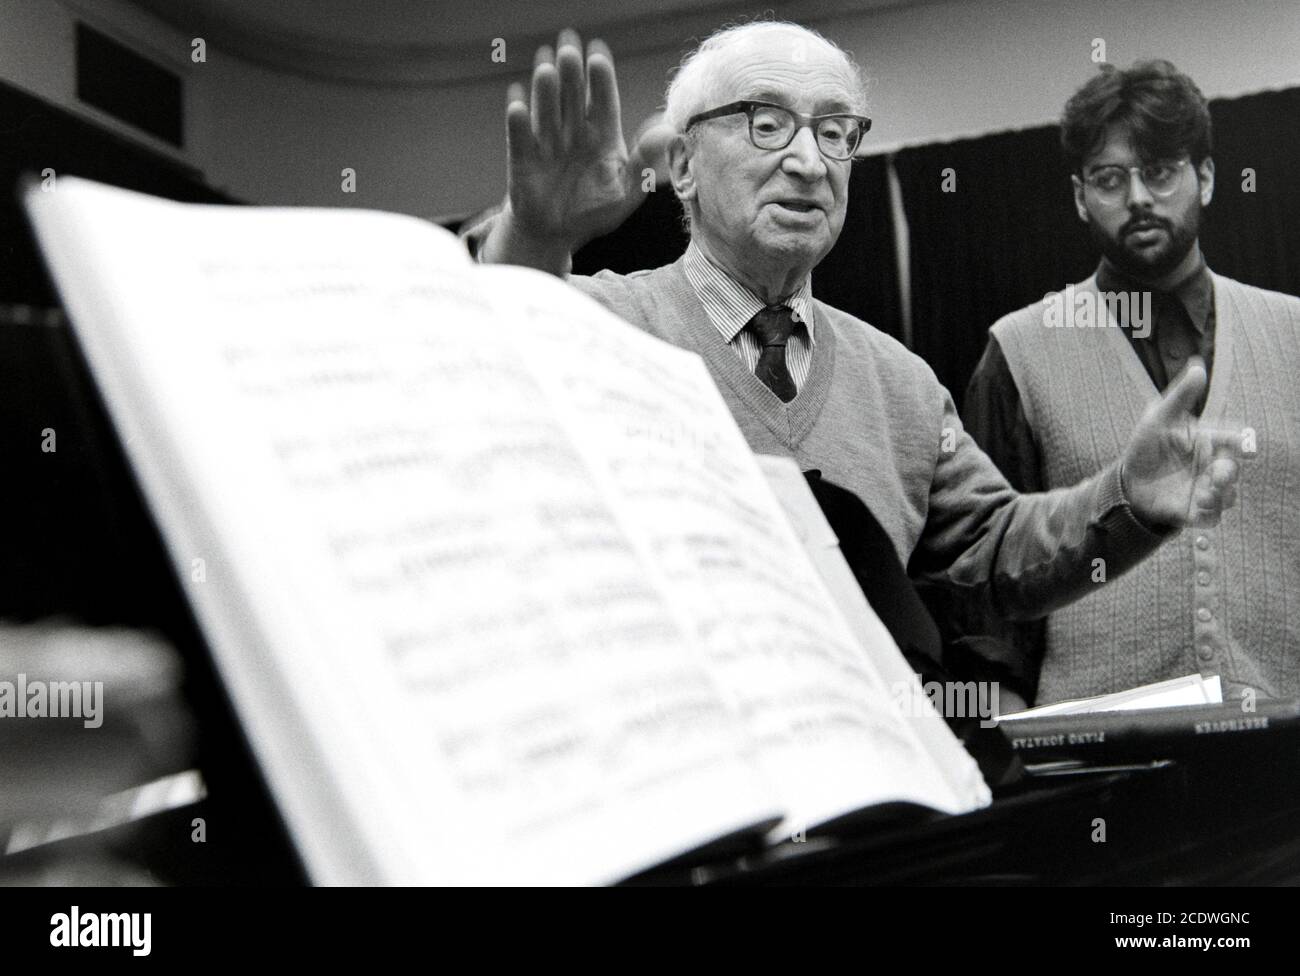 Ilya Musin, direttore russo, ha una masterclass presso la Royal Academy of Music, Marylebone Road, Londra. 20 aprile 1993. Foto: Neil Turner Foto Stock